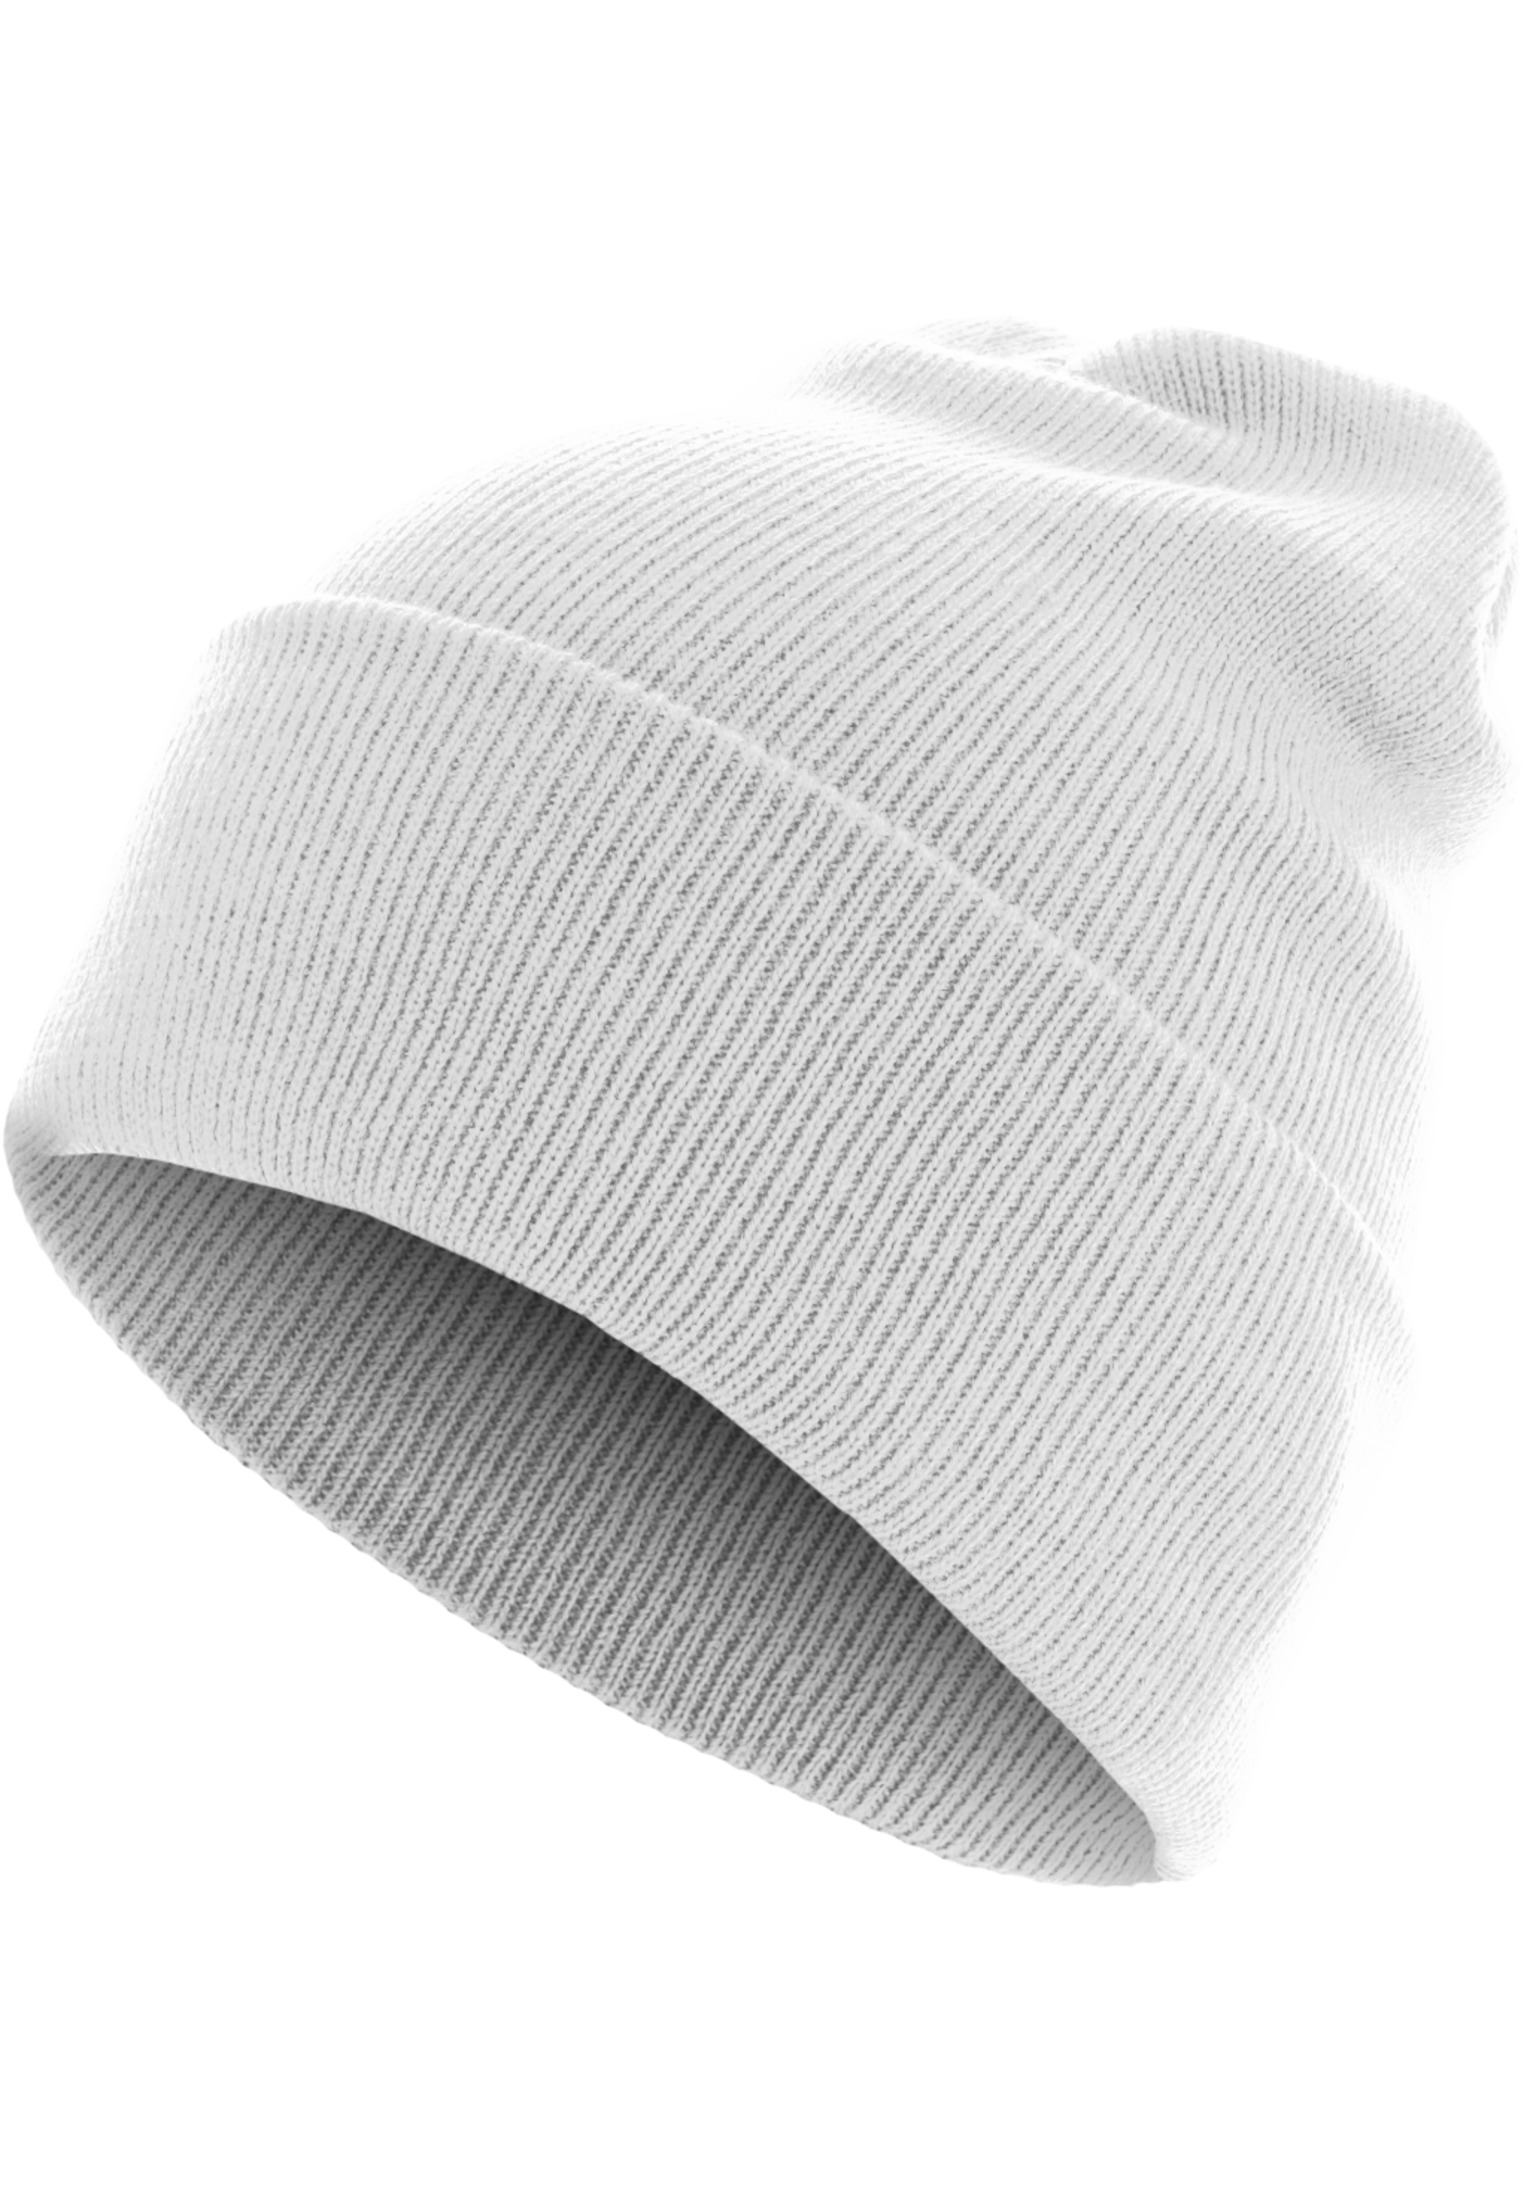 Caps & Beanies Beanie Basic Flap Long Version in Farbe white